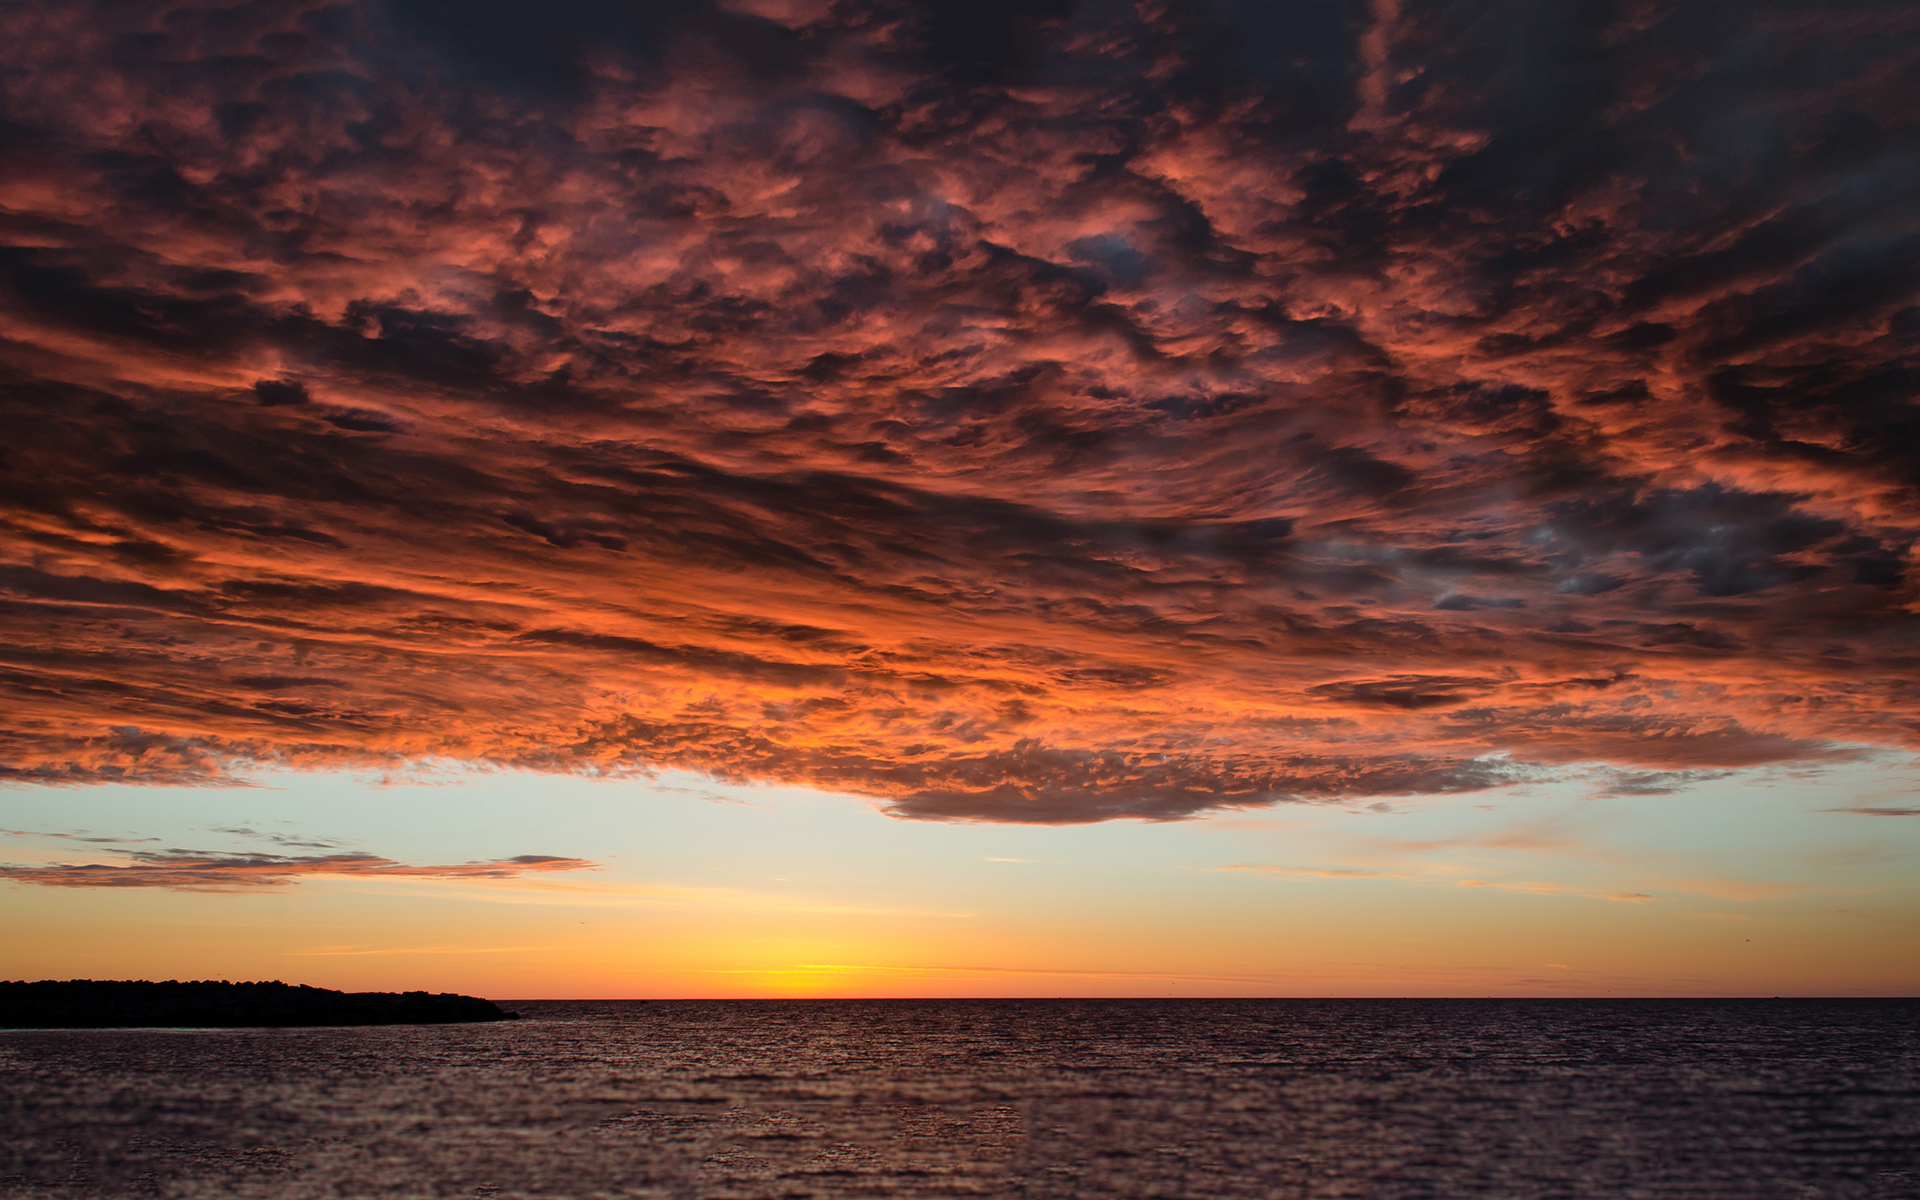 Red sunset over lake michigan